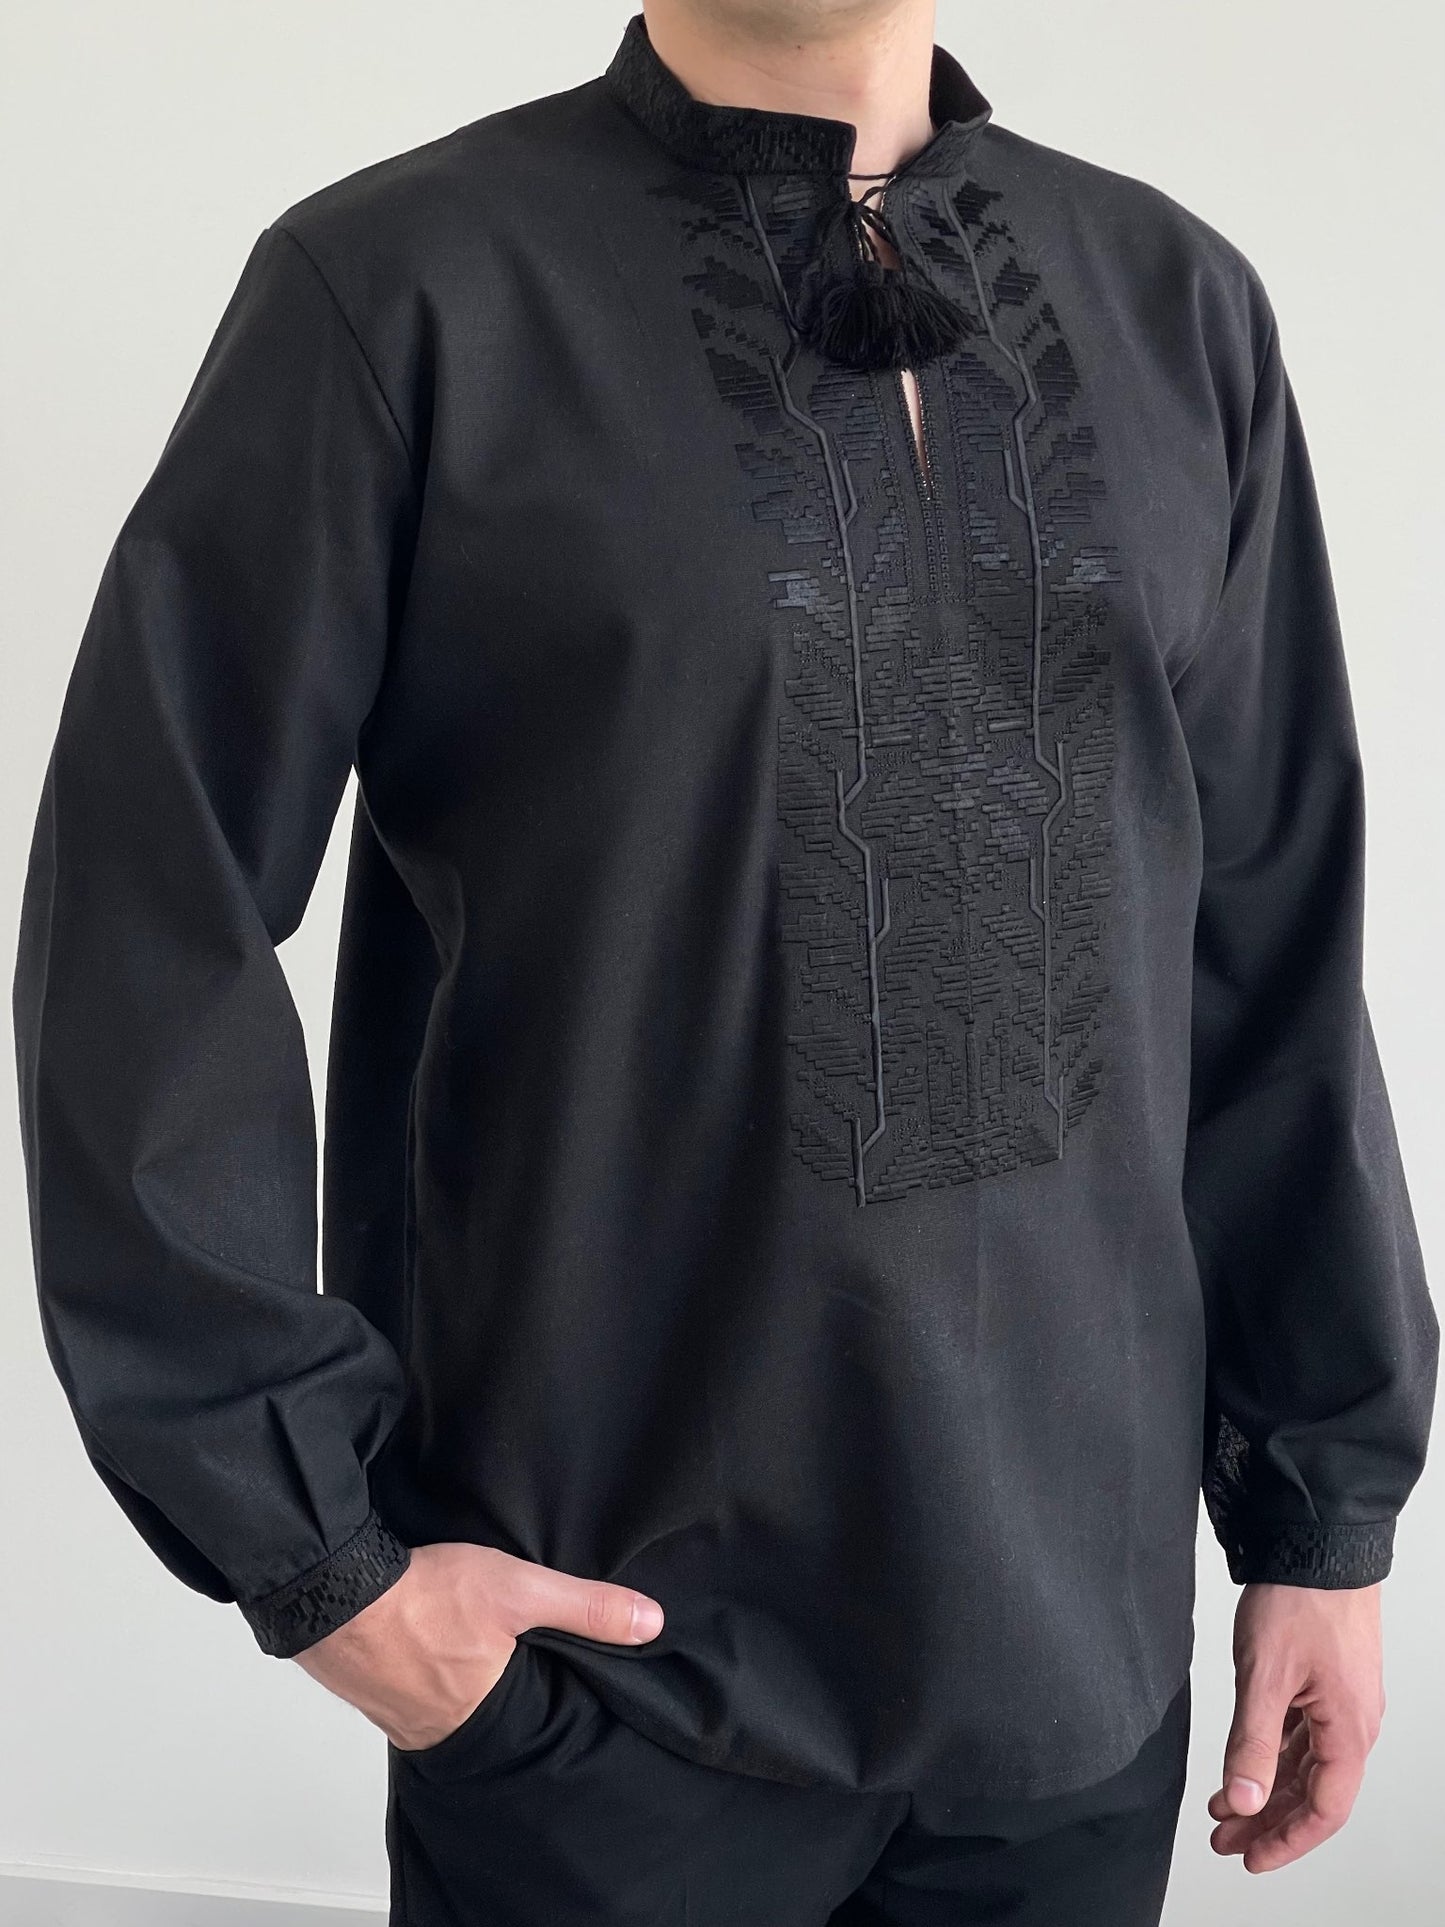 Long Sleeve Black Vyshyvanka Shirt with Black Embroidery and Ukrainian Symbol (Чоловіча Вишиванка)